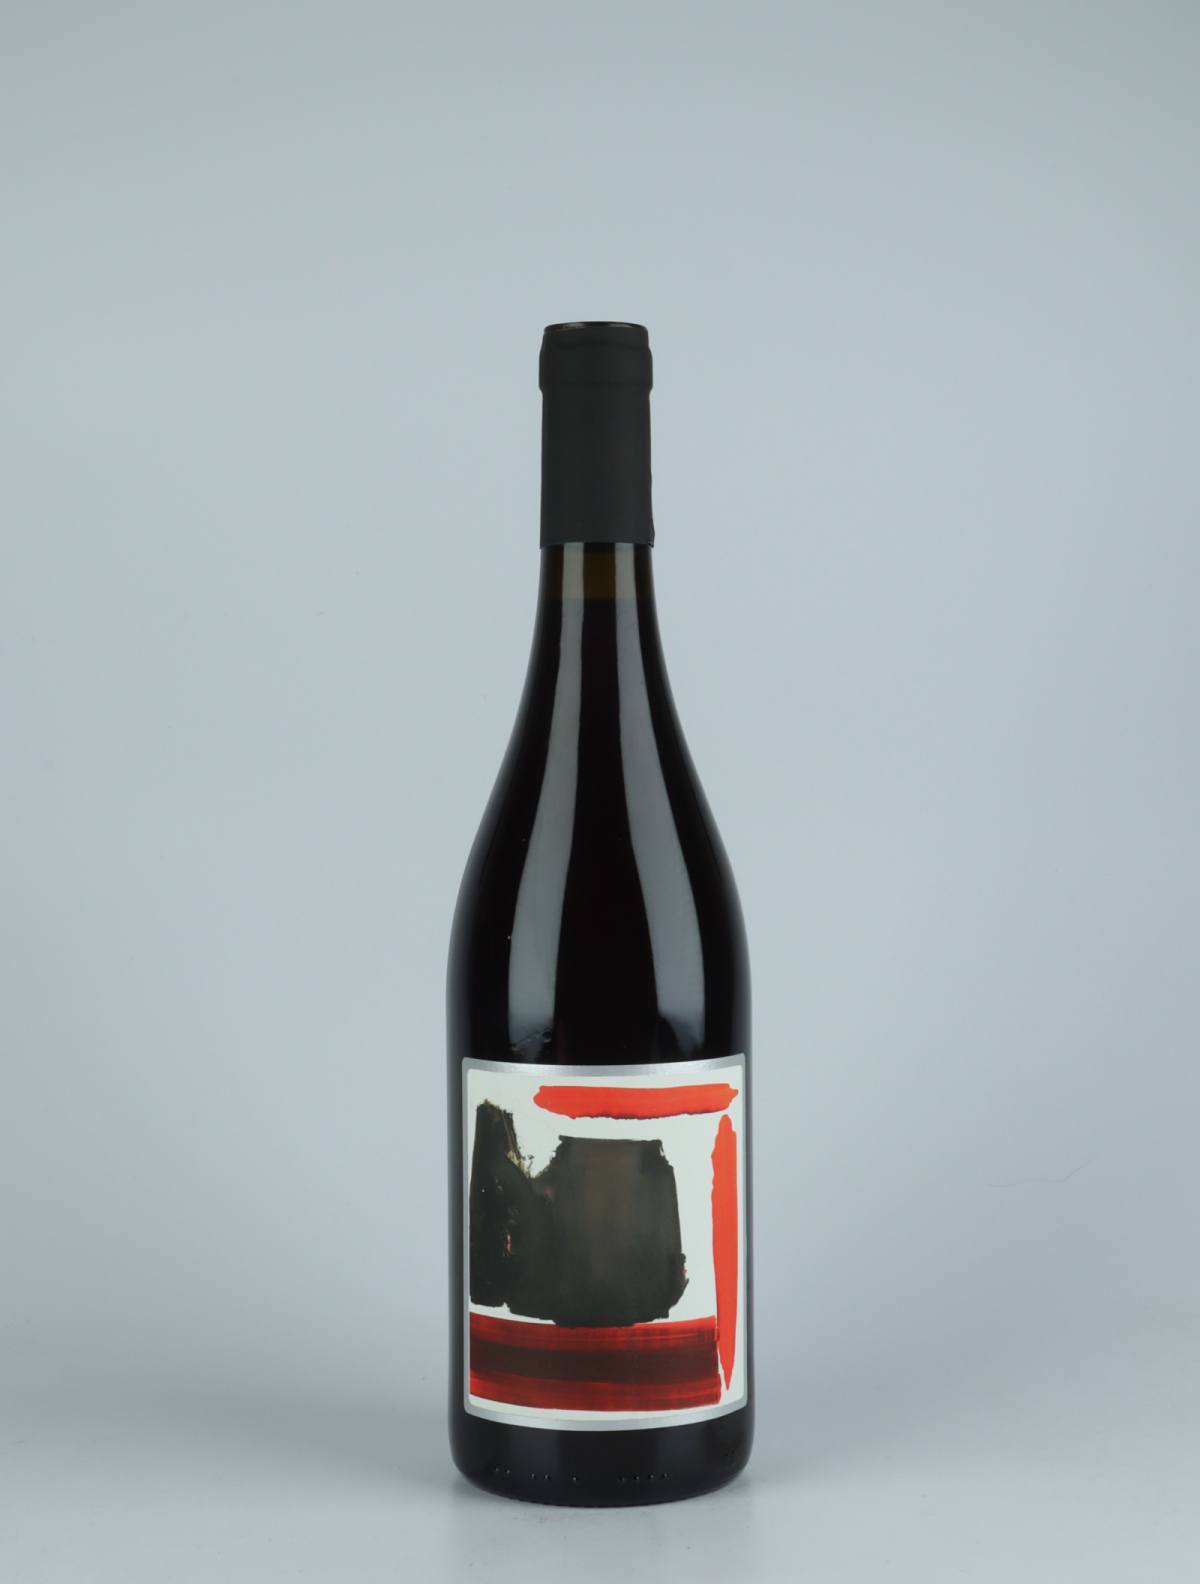 En flaske 2019 Cenerina Rødvin fra Cascina Val Liberata, Piemonte i Italien